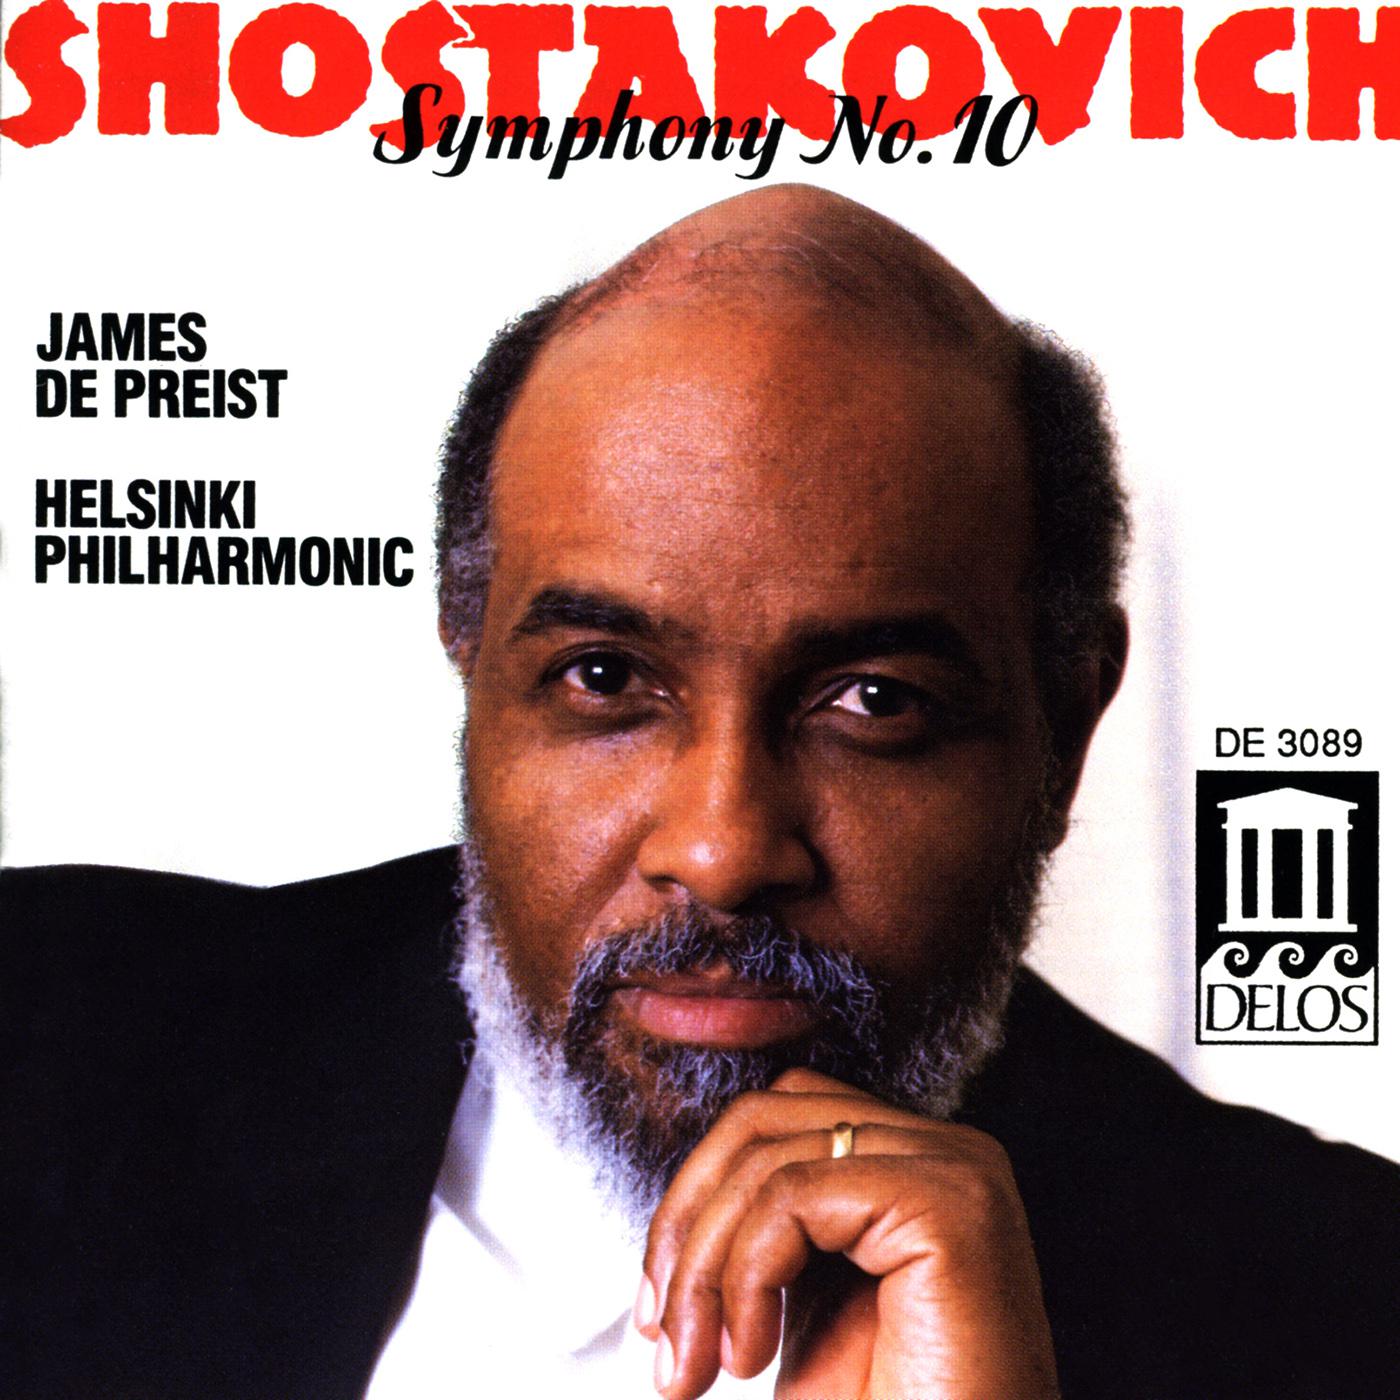 SHOSTAKOVICH, D.: Symphony No. 10 / Festive Overture (Helsinki Philharmonic, DePreist)